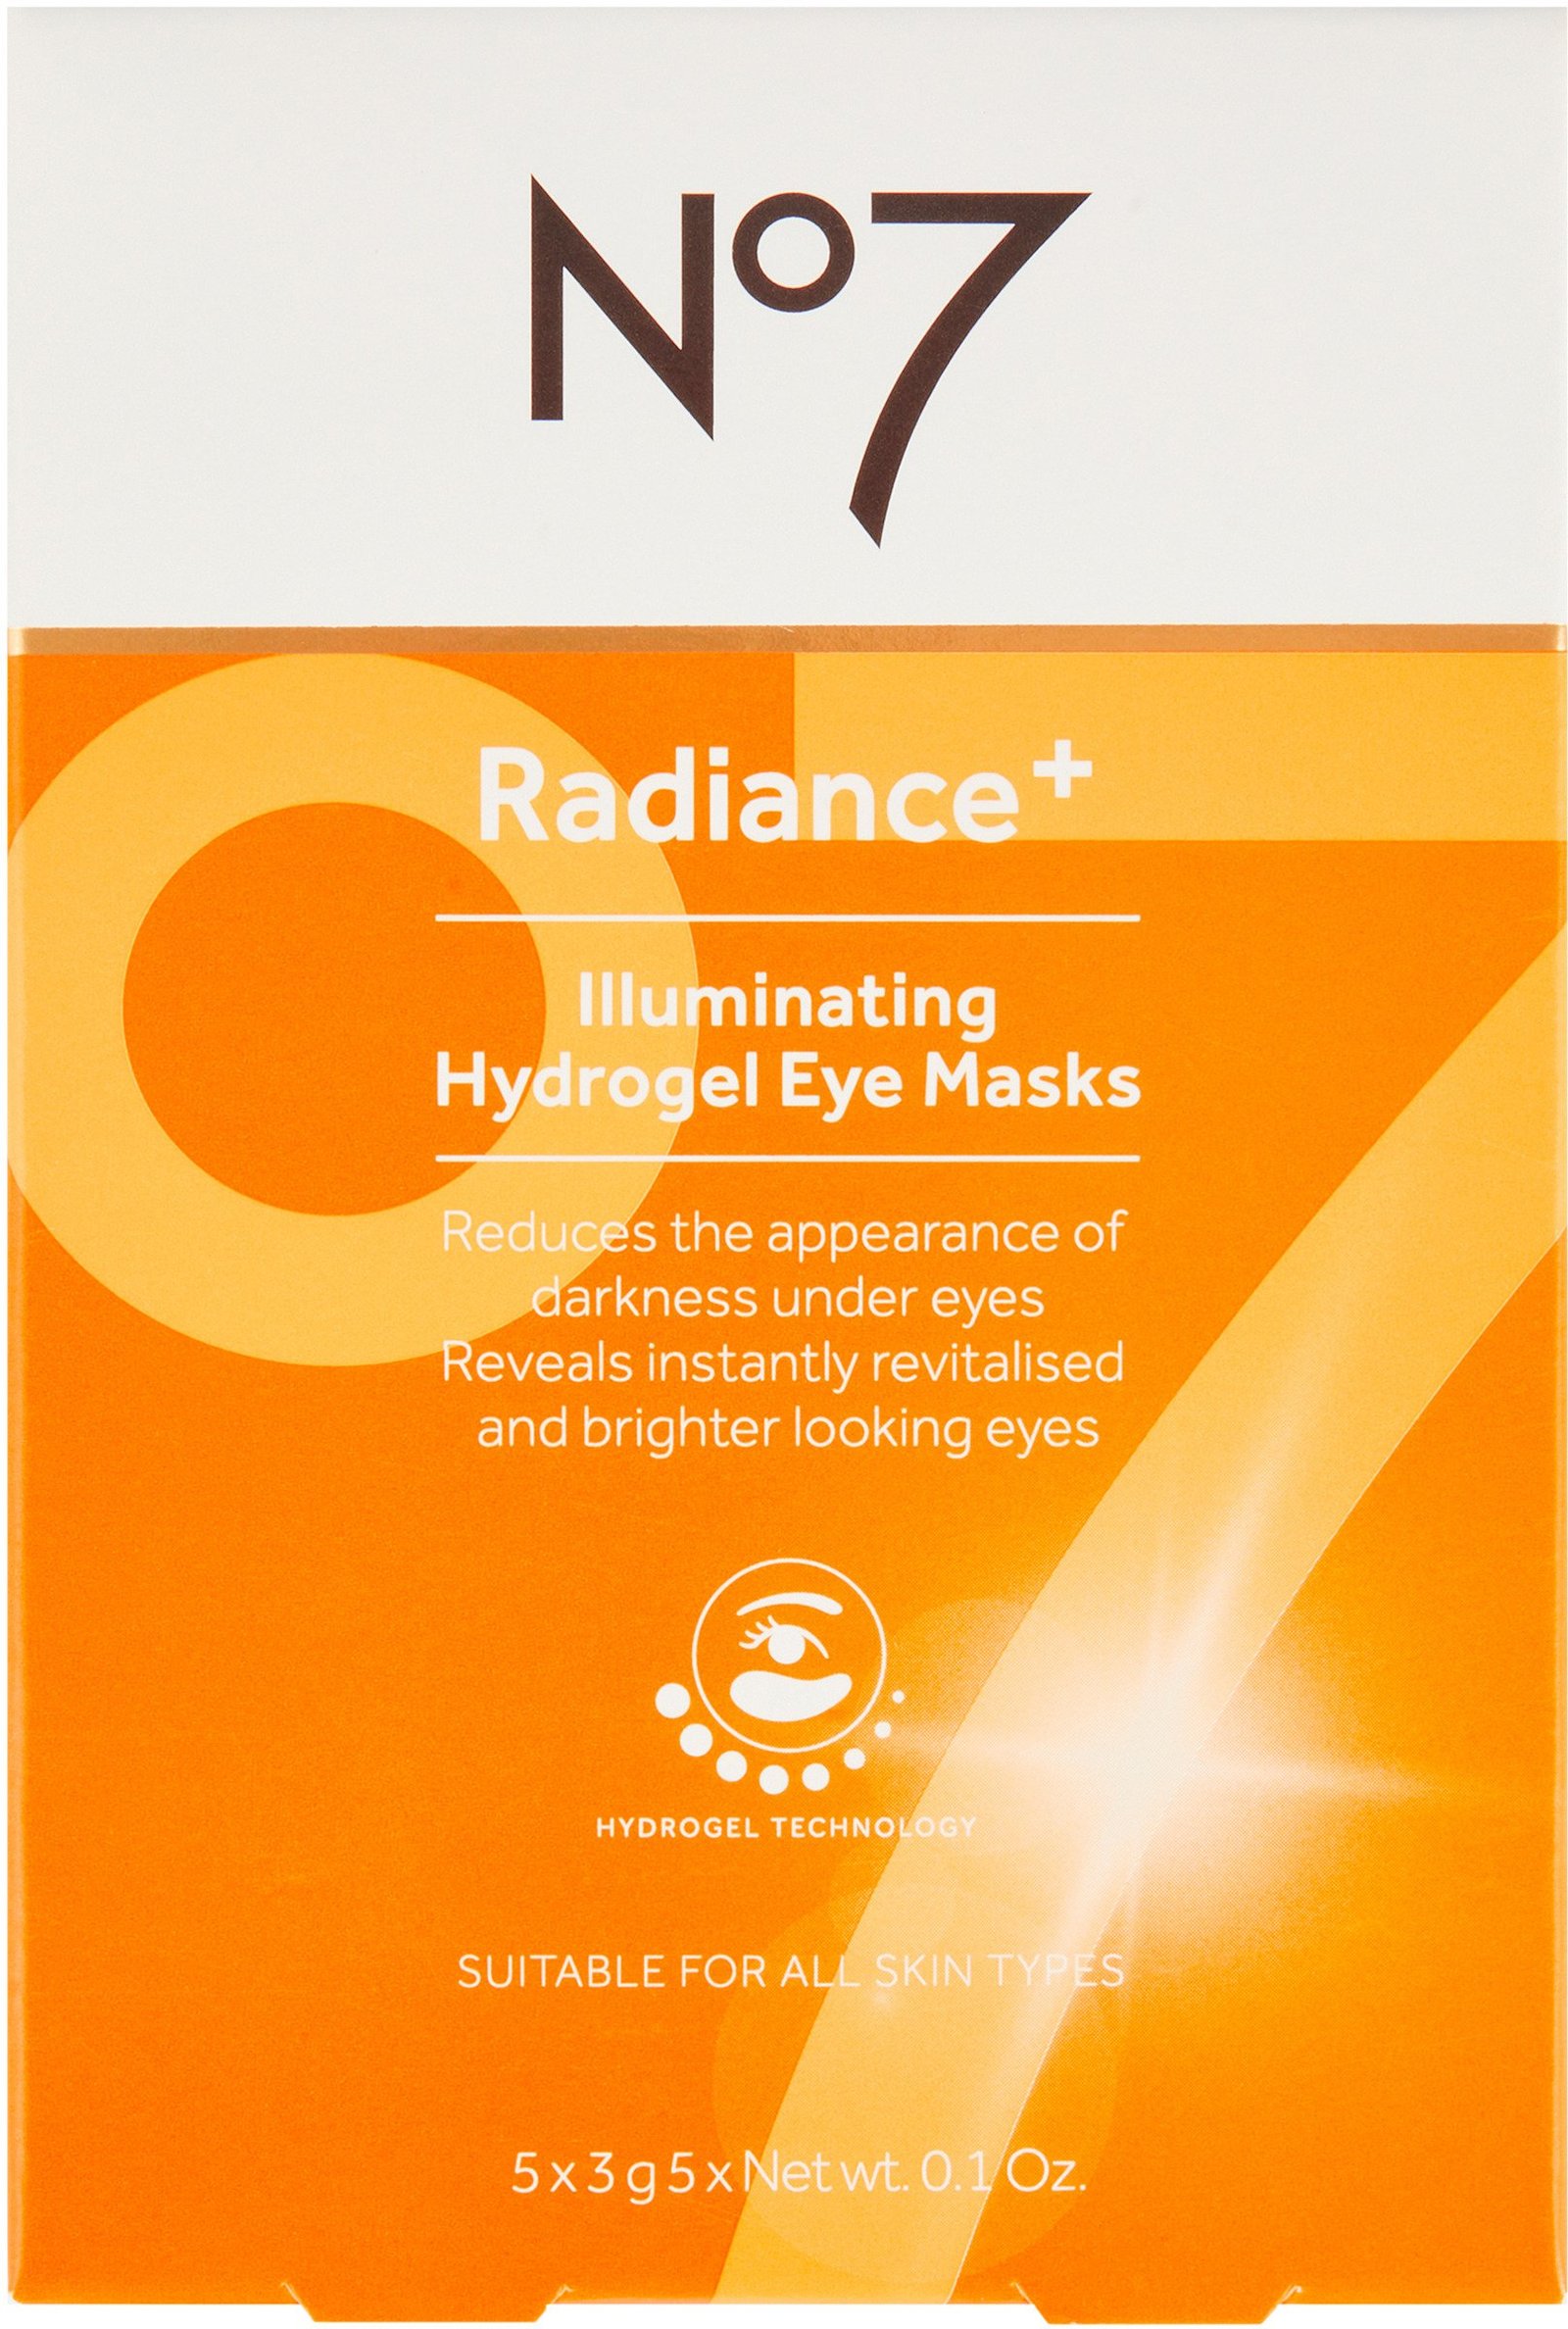 No7 Radiance+ Illuminating Hydrogel Eye Masks 5 st